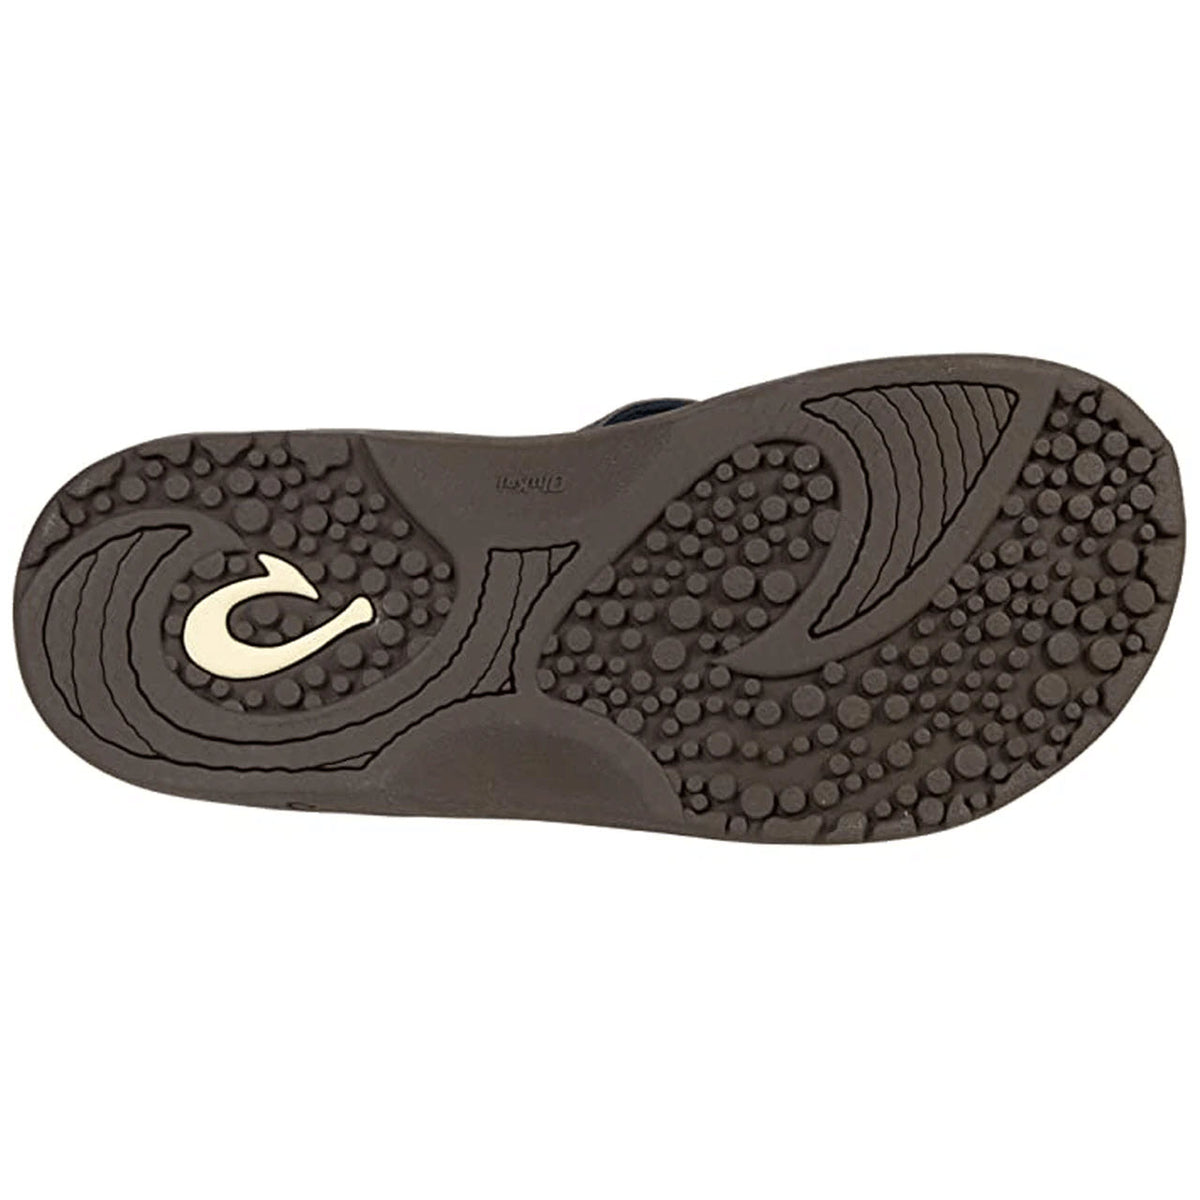 Sole of a men’s sandal with textured patterns and a circular logo. 
Product Name: OLUKAI HOKUA DARK WOOD - MENS 
Brand Name: Olukai